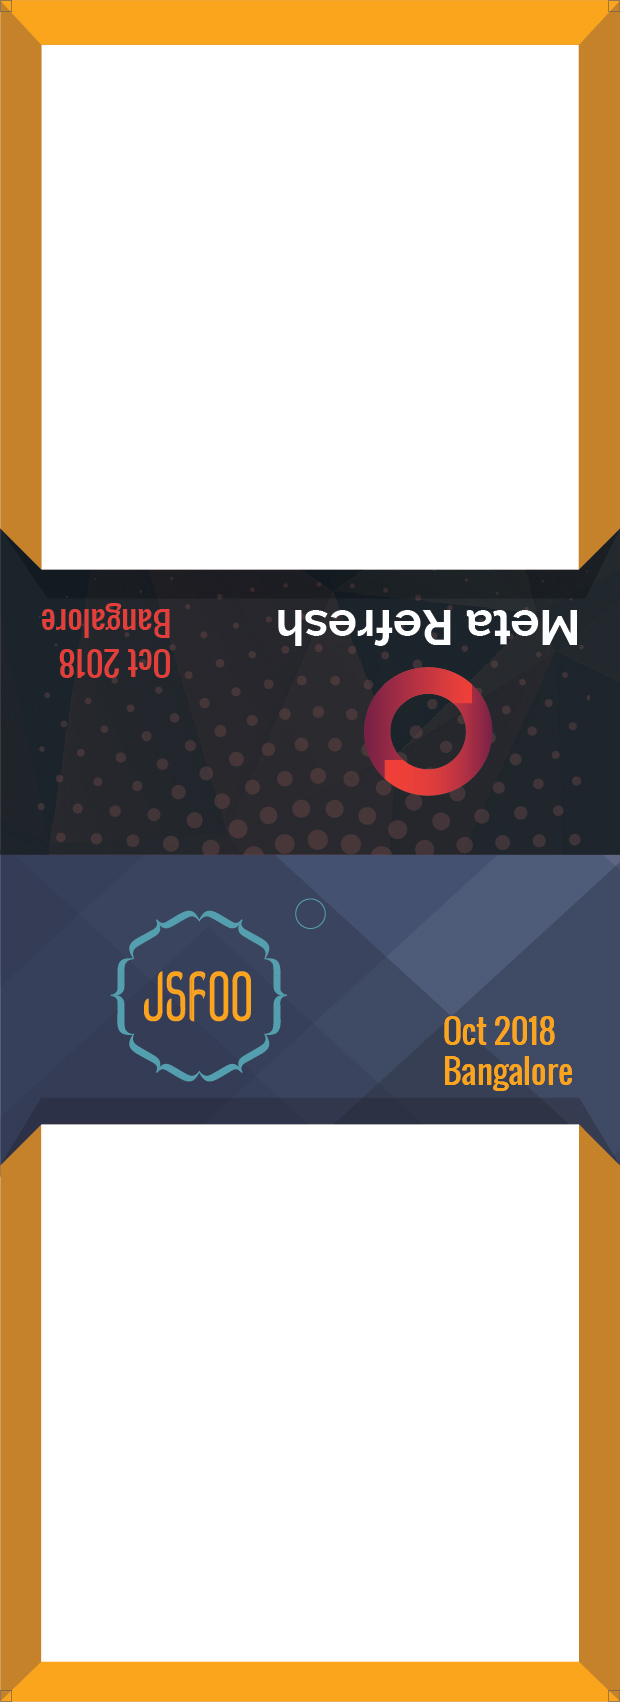 JSFoo_badge-crew_vol.jpg